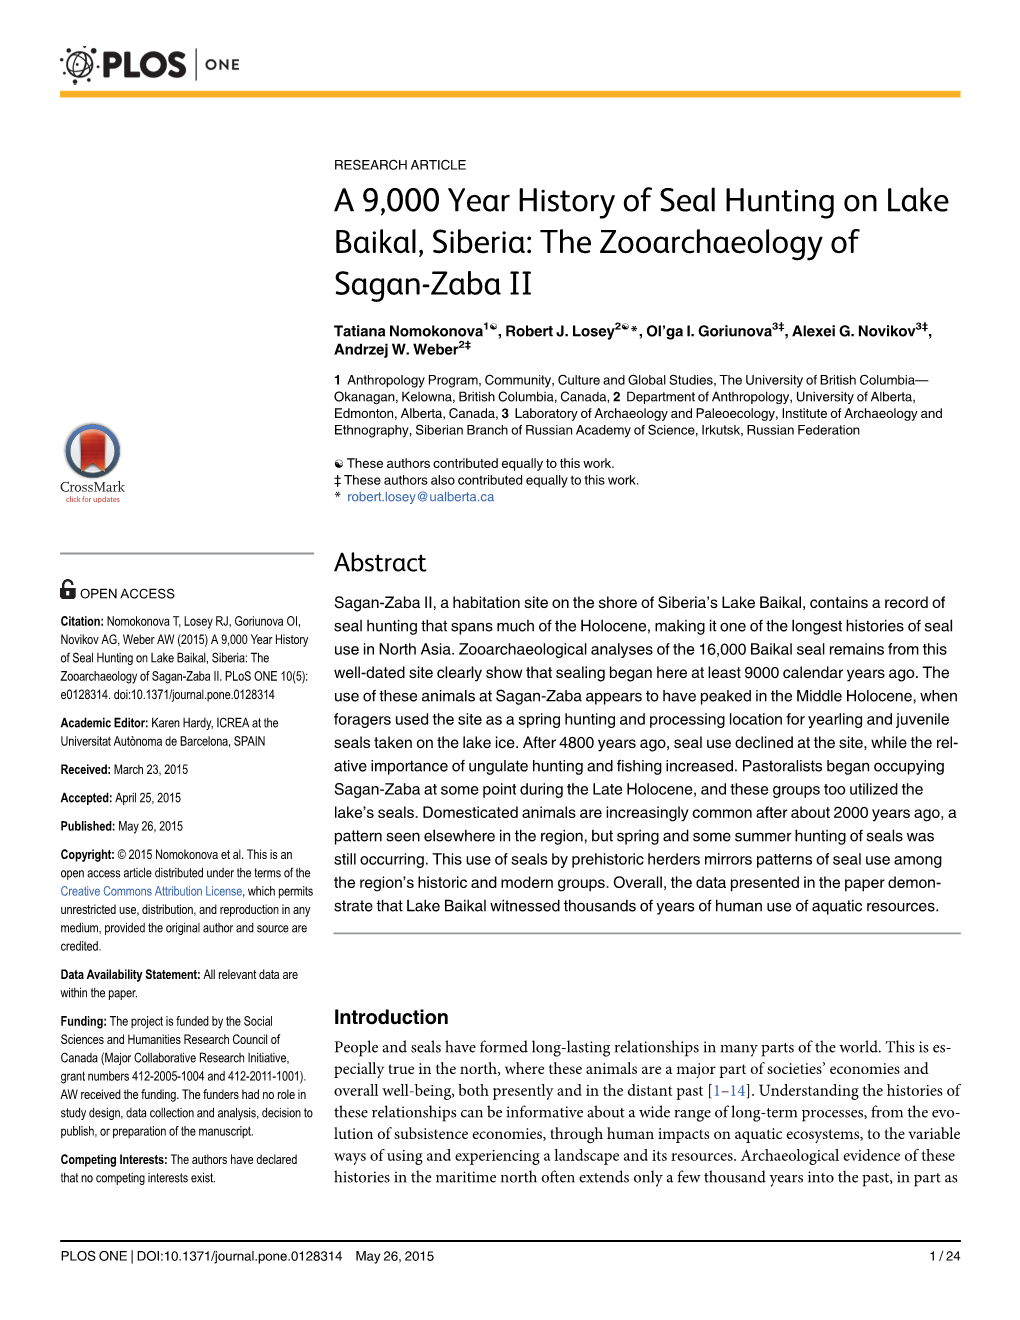 A 9,000 Year History of Seal Hunting on Lake Baikal, Siberia: the Zooarchaeology of Sagan-Zaba II